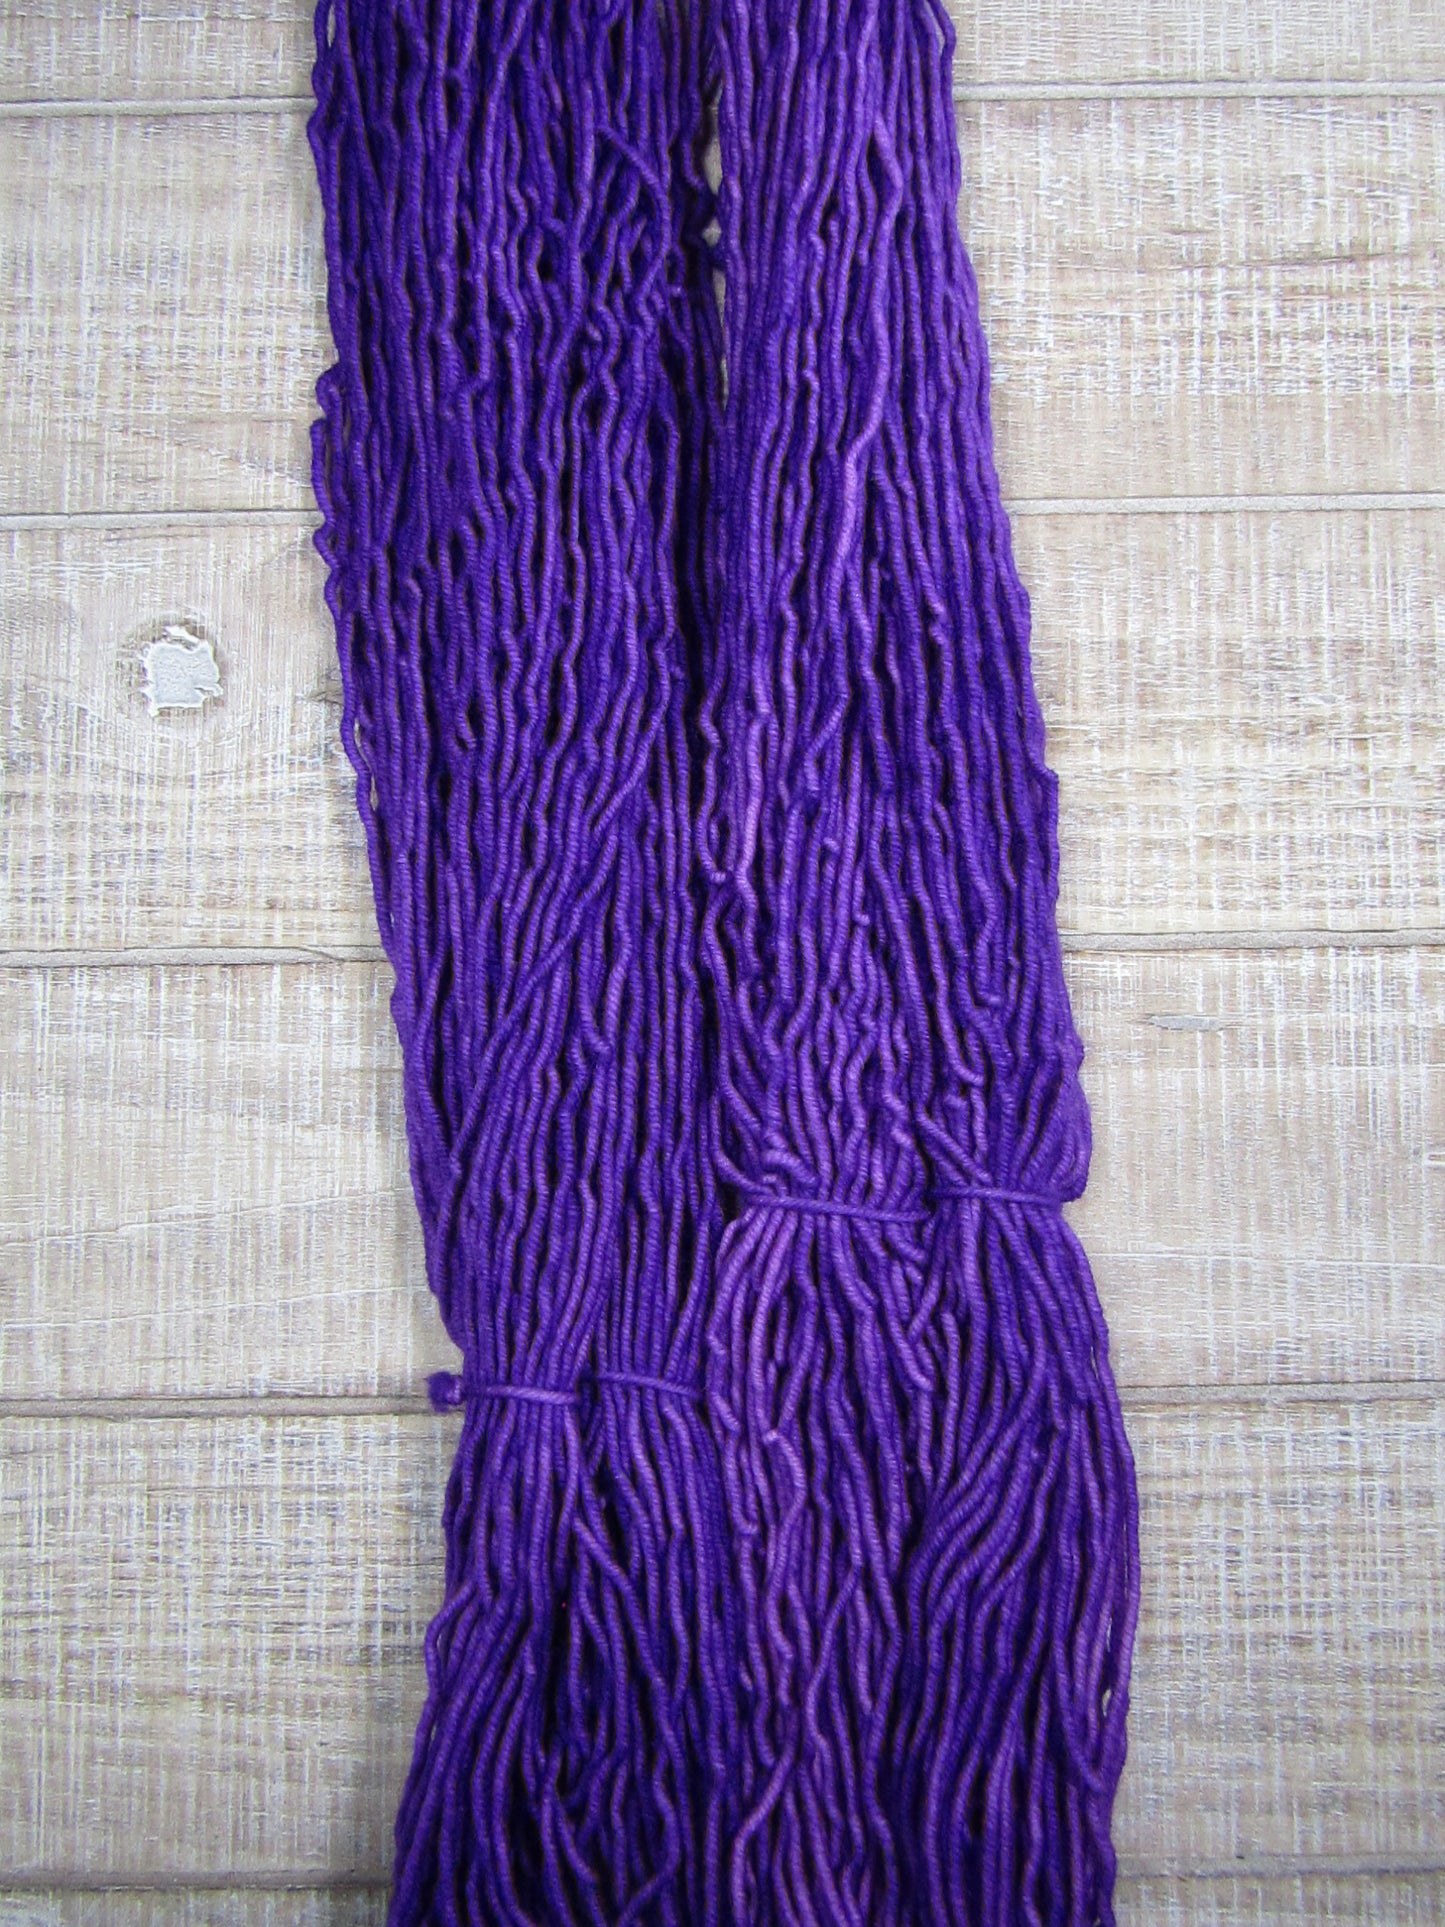 Hand-dyed yarn - Plum Merino/Cashstyle nylon worsted weight yarn in a plum purple color